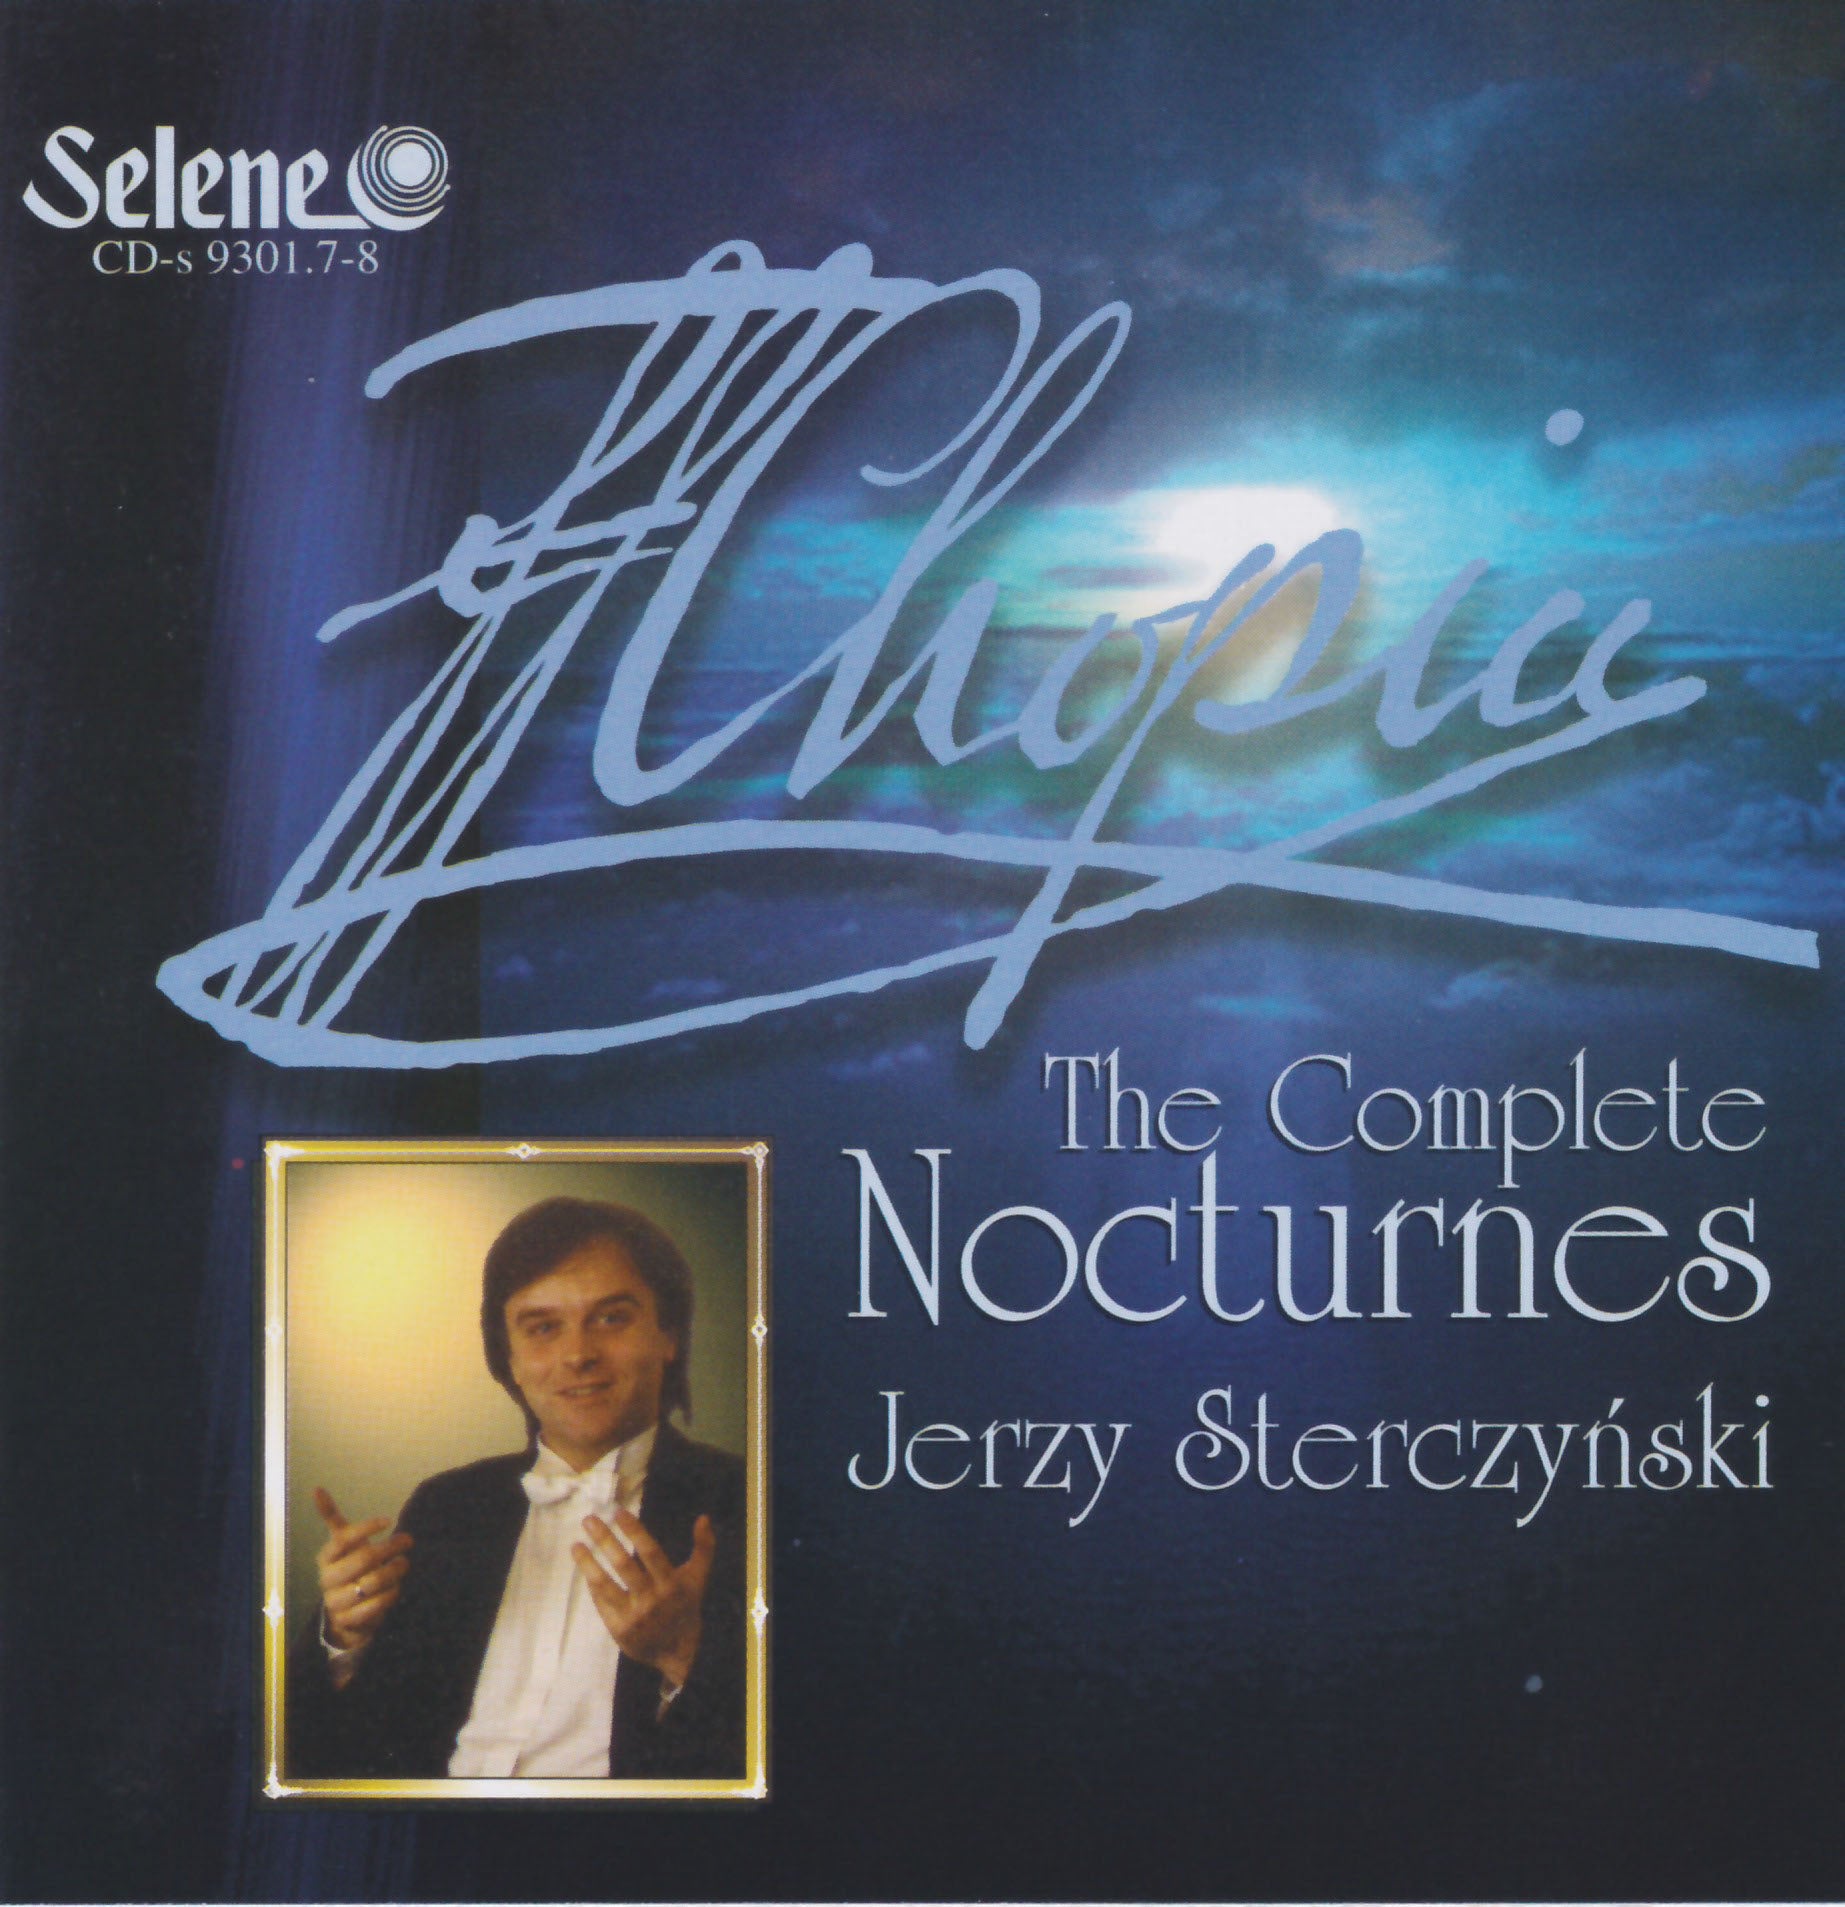 Chopin -  The Complete Nocturnes - Jerzy Sterczynski